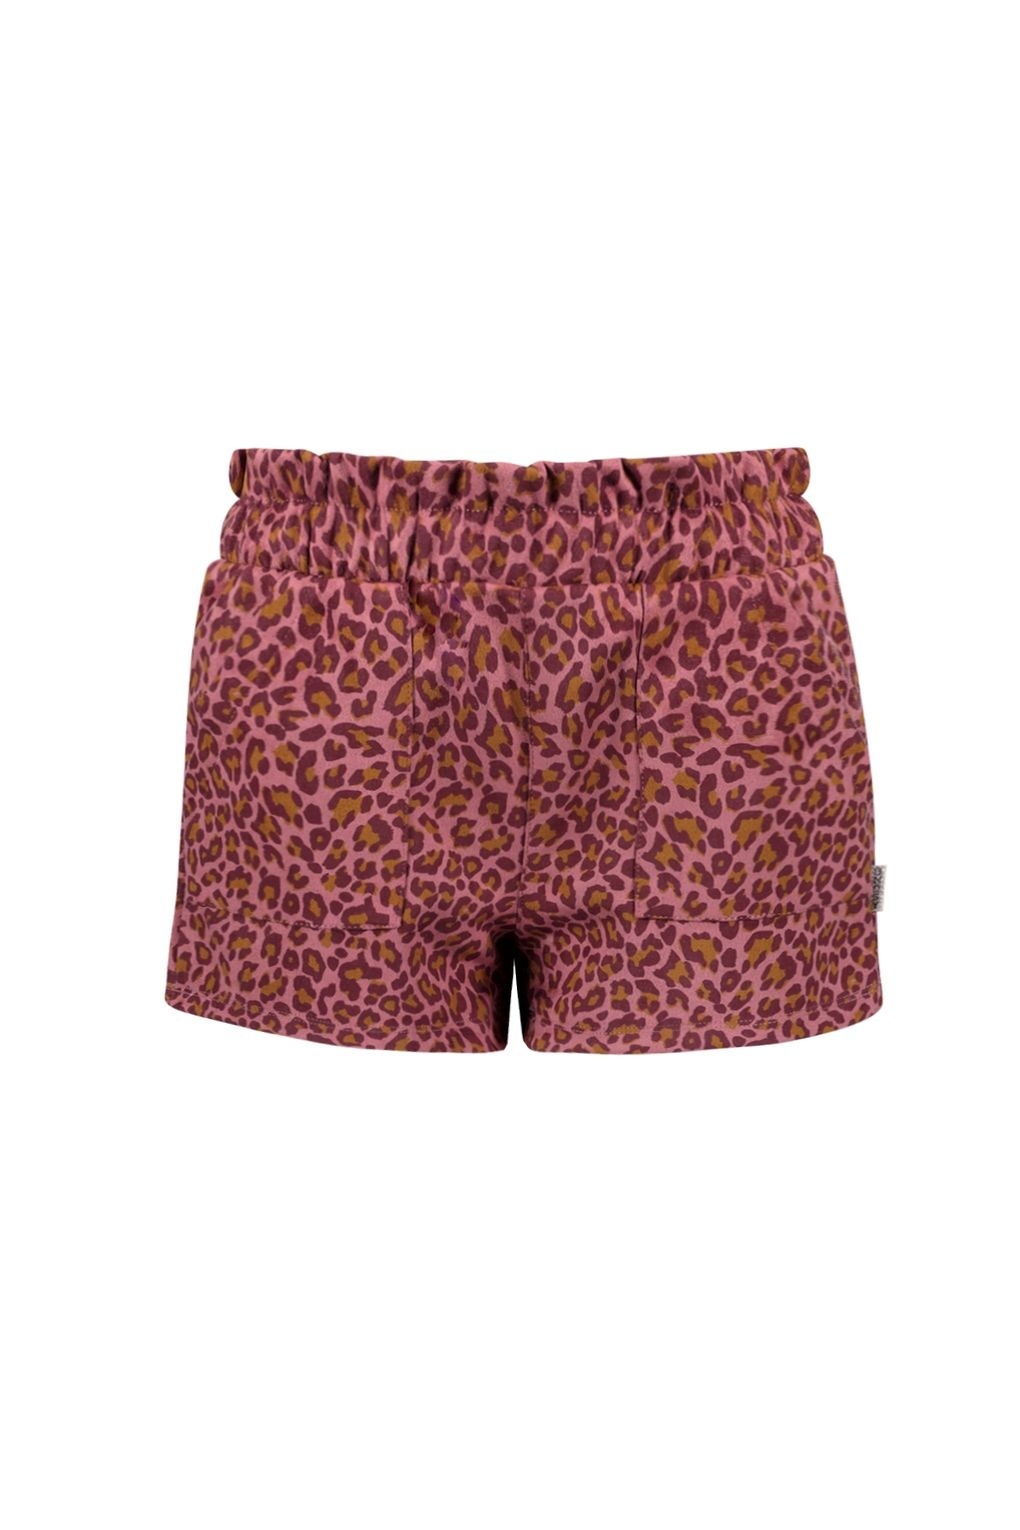 Meisjes short panter print roze - Dirkje - Delight panter